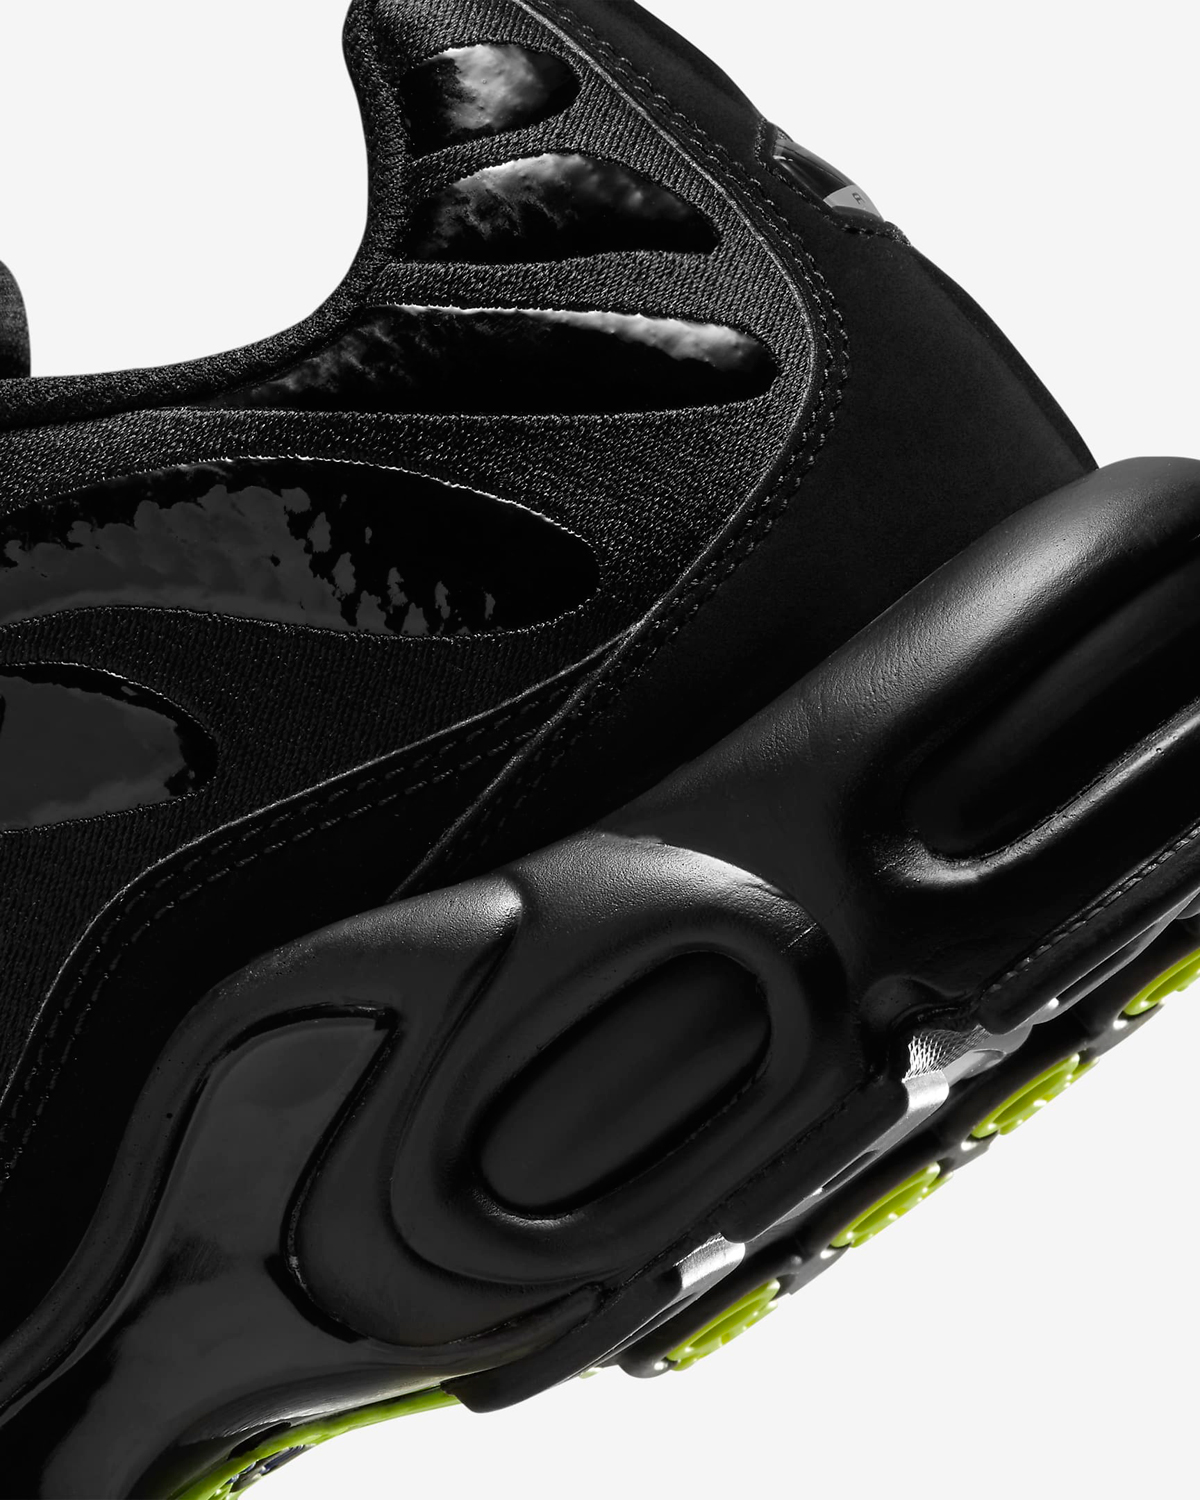 Nike-Air-Max-Plus-Black-Volt-Metalllic-Silver-Release-Date-8